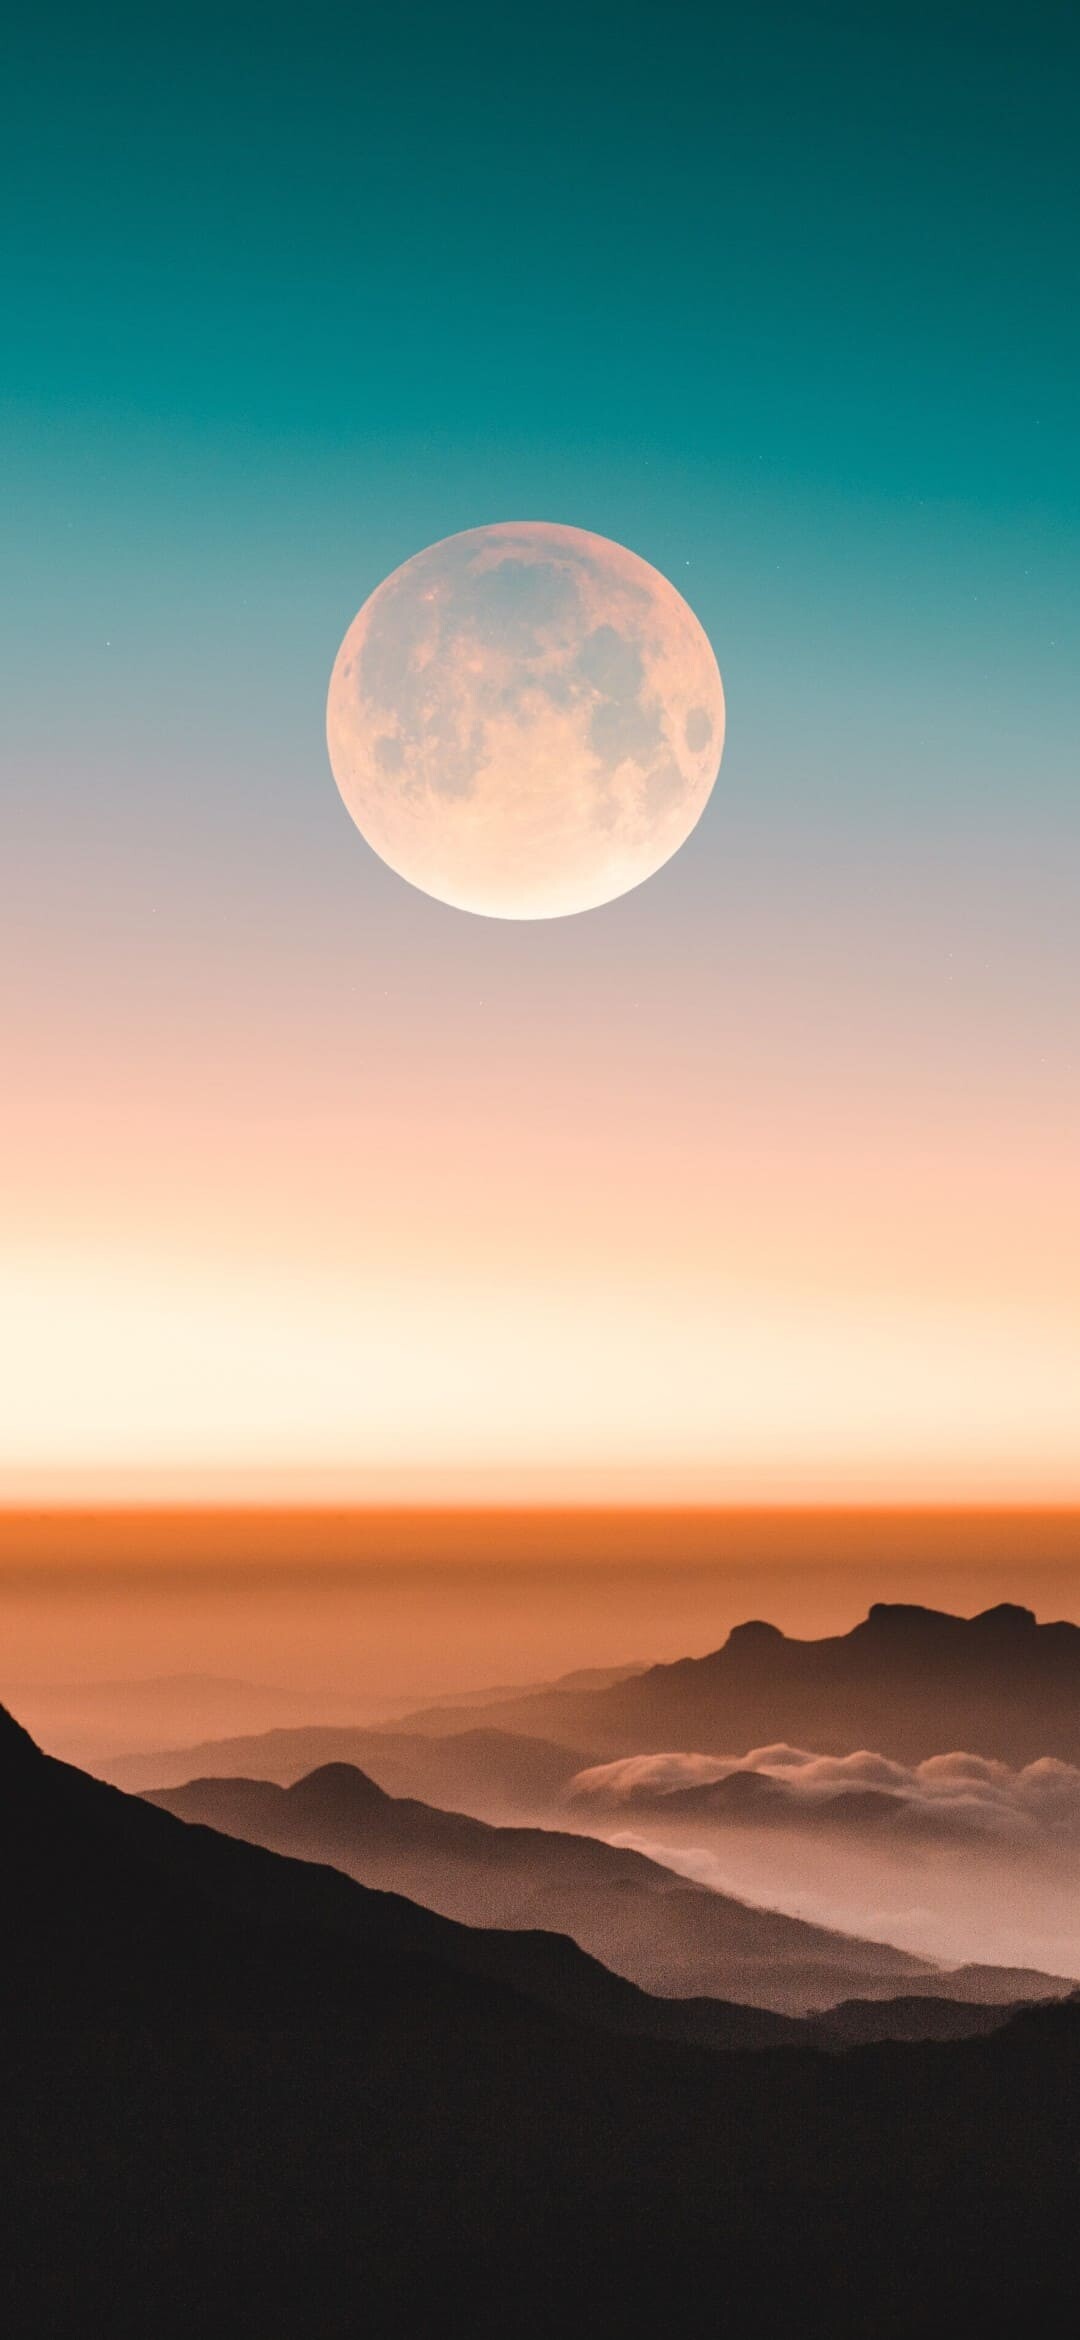 Moon: A celestial body that orbits a planet, Natural environment. 1080x2340 HD Wallpaper.